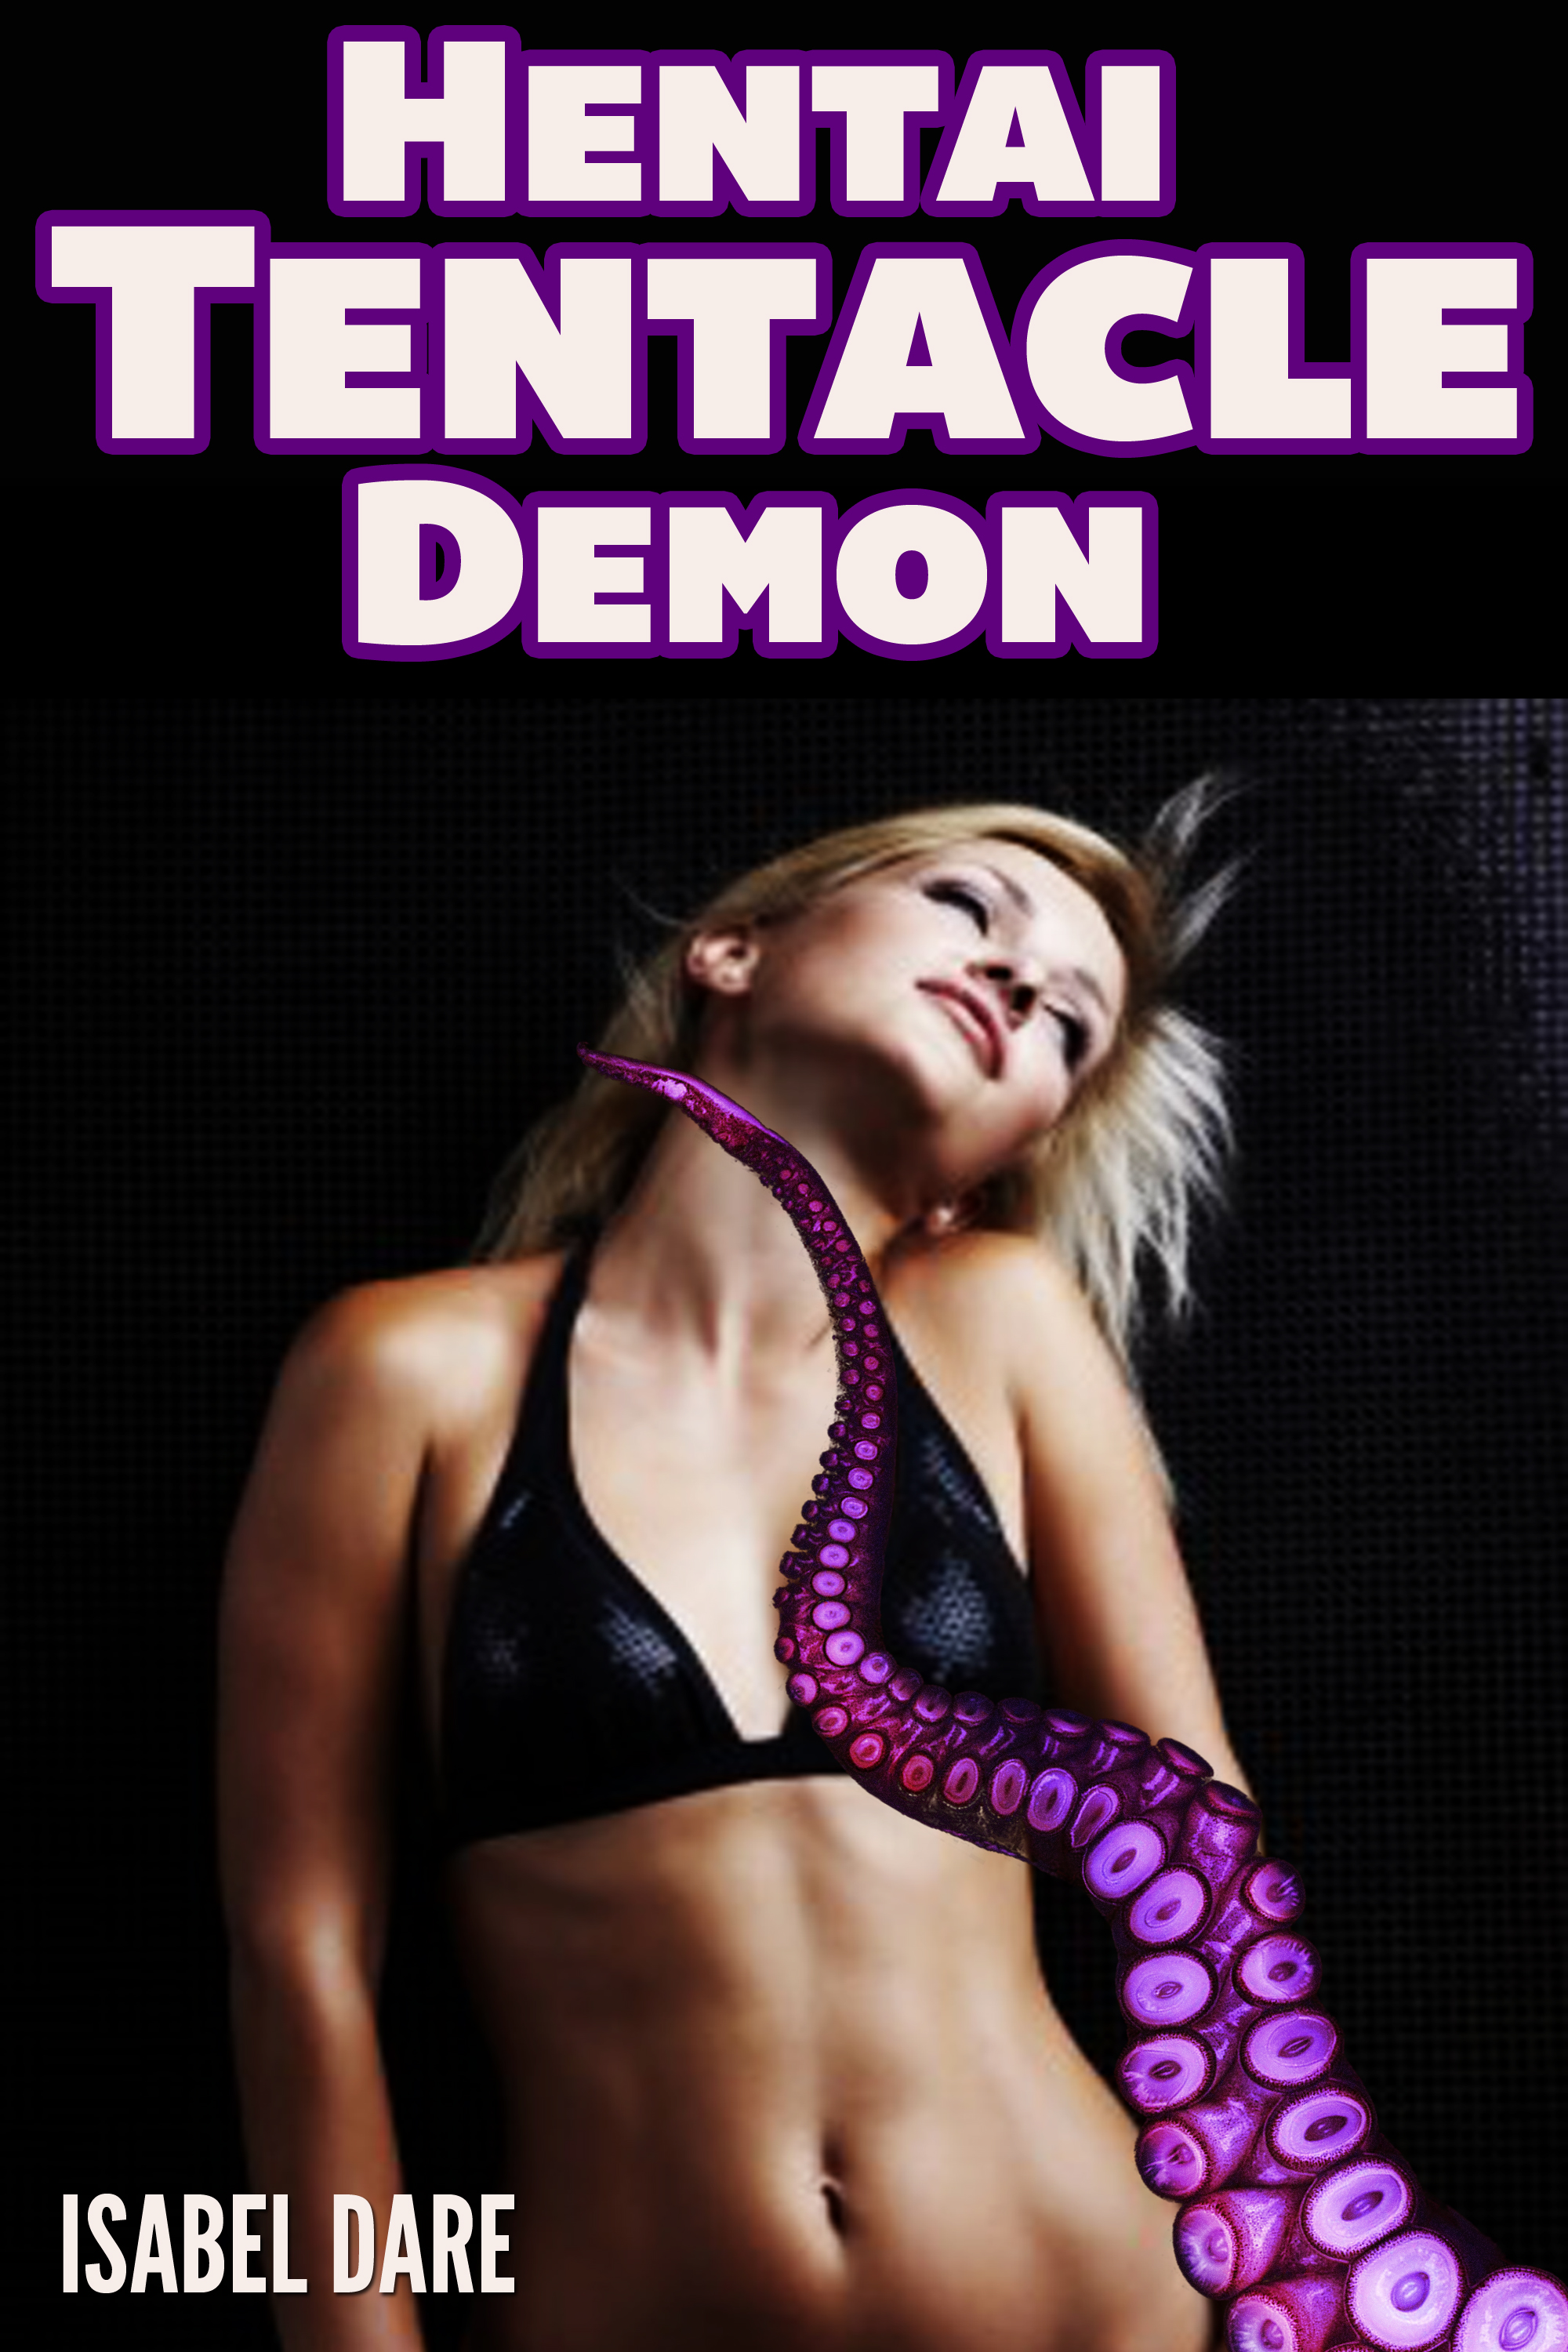 Hentai Tentacle Monster Porn - Hentai Tentacle Demon (Tentacle Monster Erotica), an Ebook by Isabel Dare